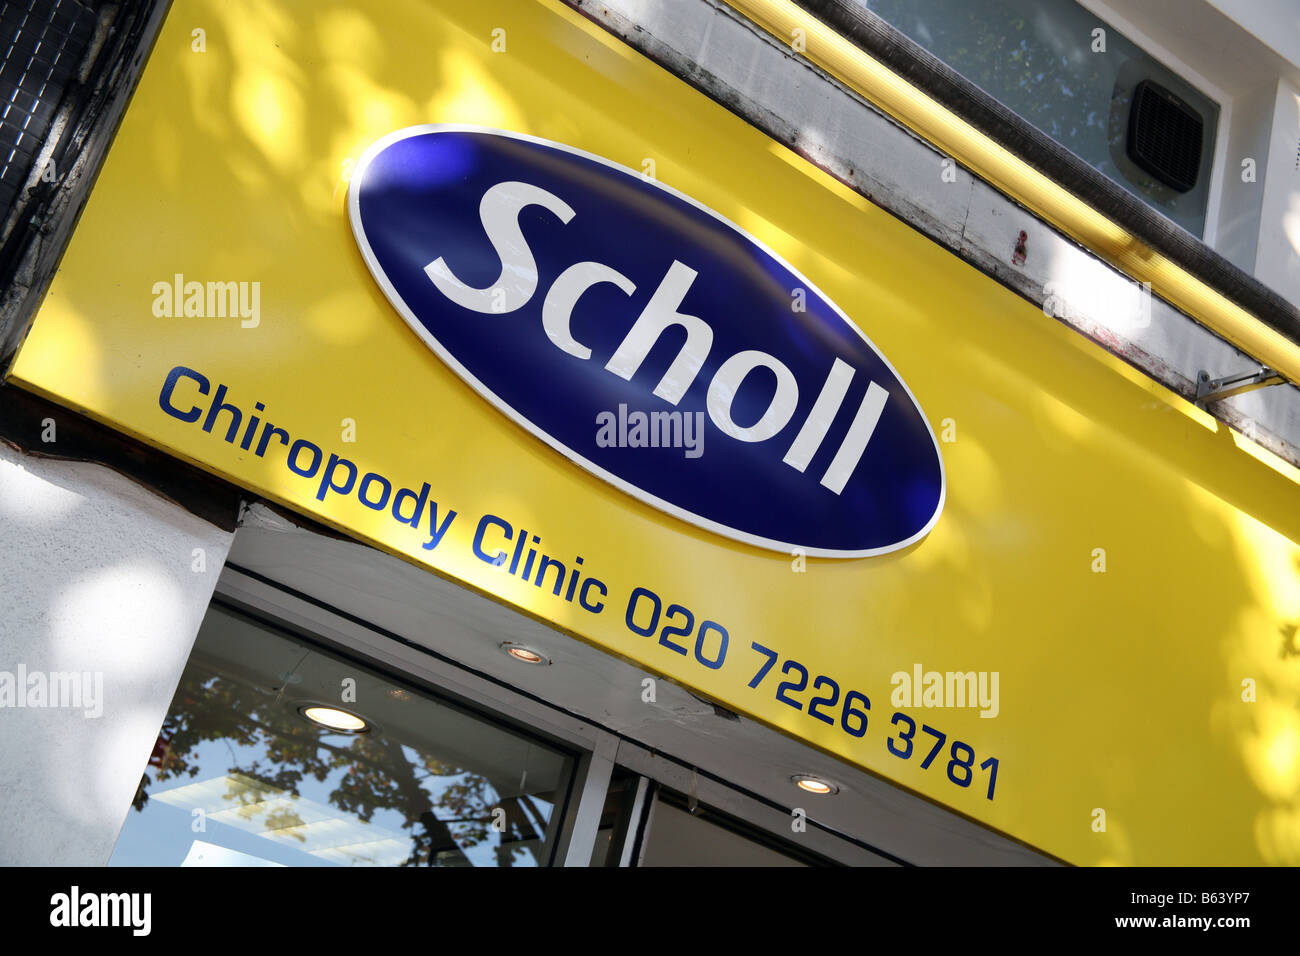 Branch of Scholl chiropody clinic & shoe shop, London Stock Photo